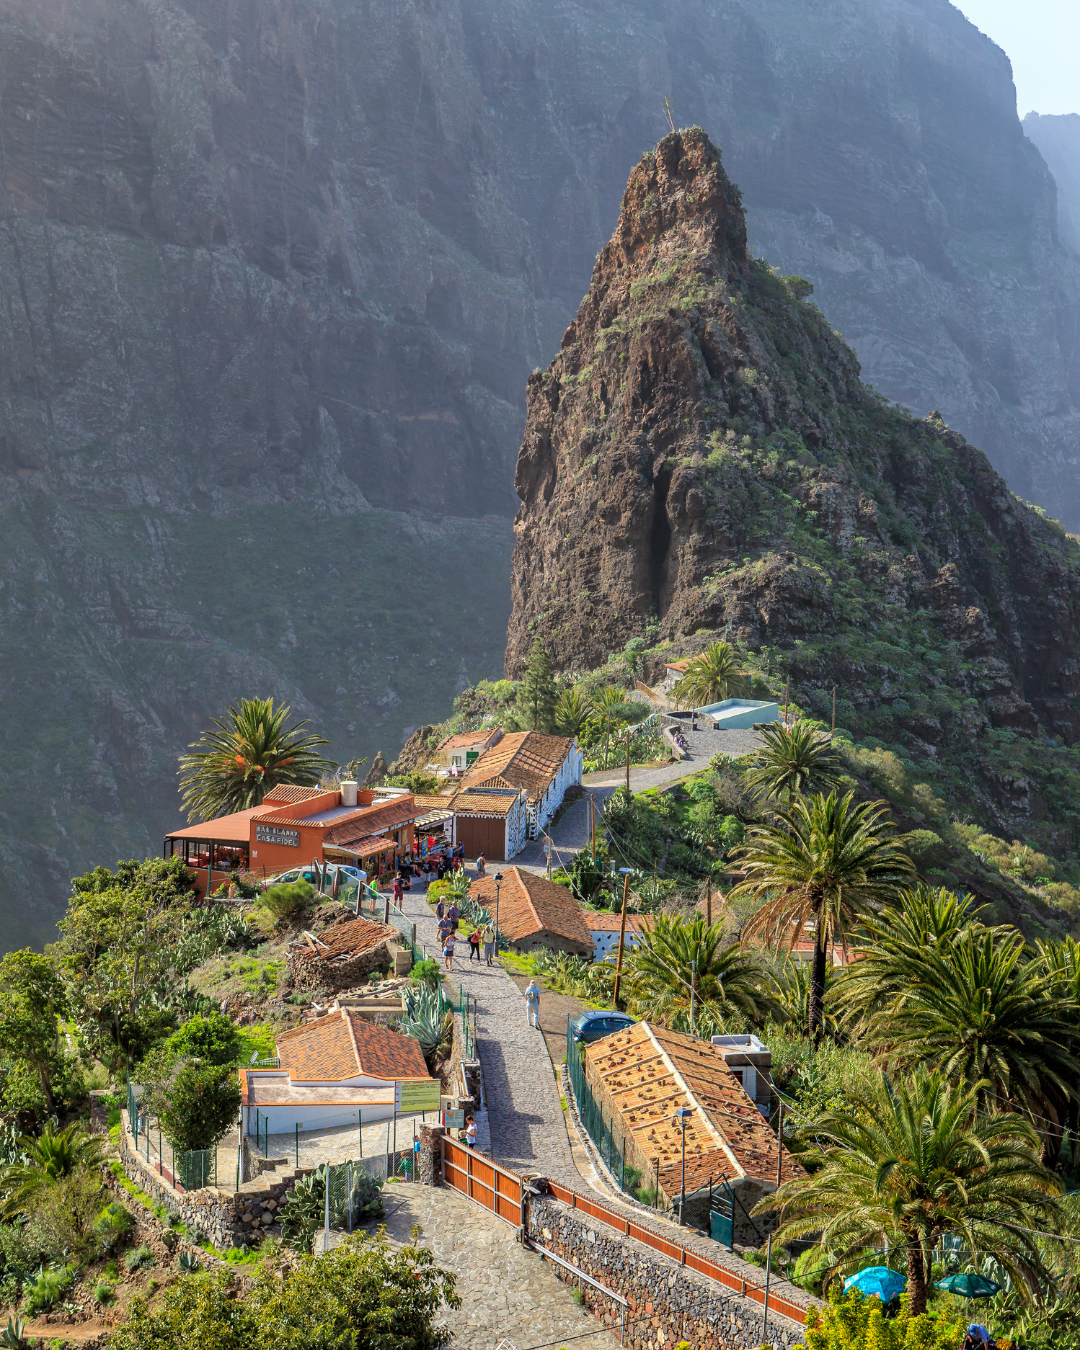 Masca, Small Mountain Village on the Island of Tenerife, Spain - Tenerife Holidays Barter's Travelnet